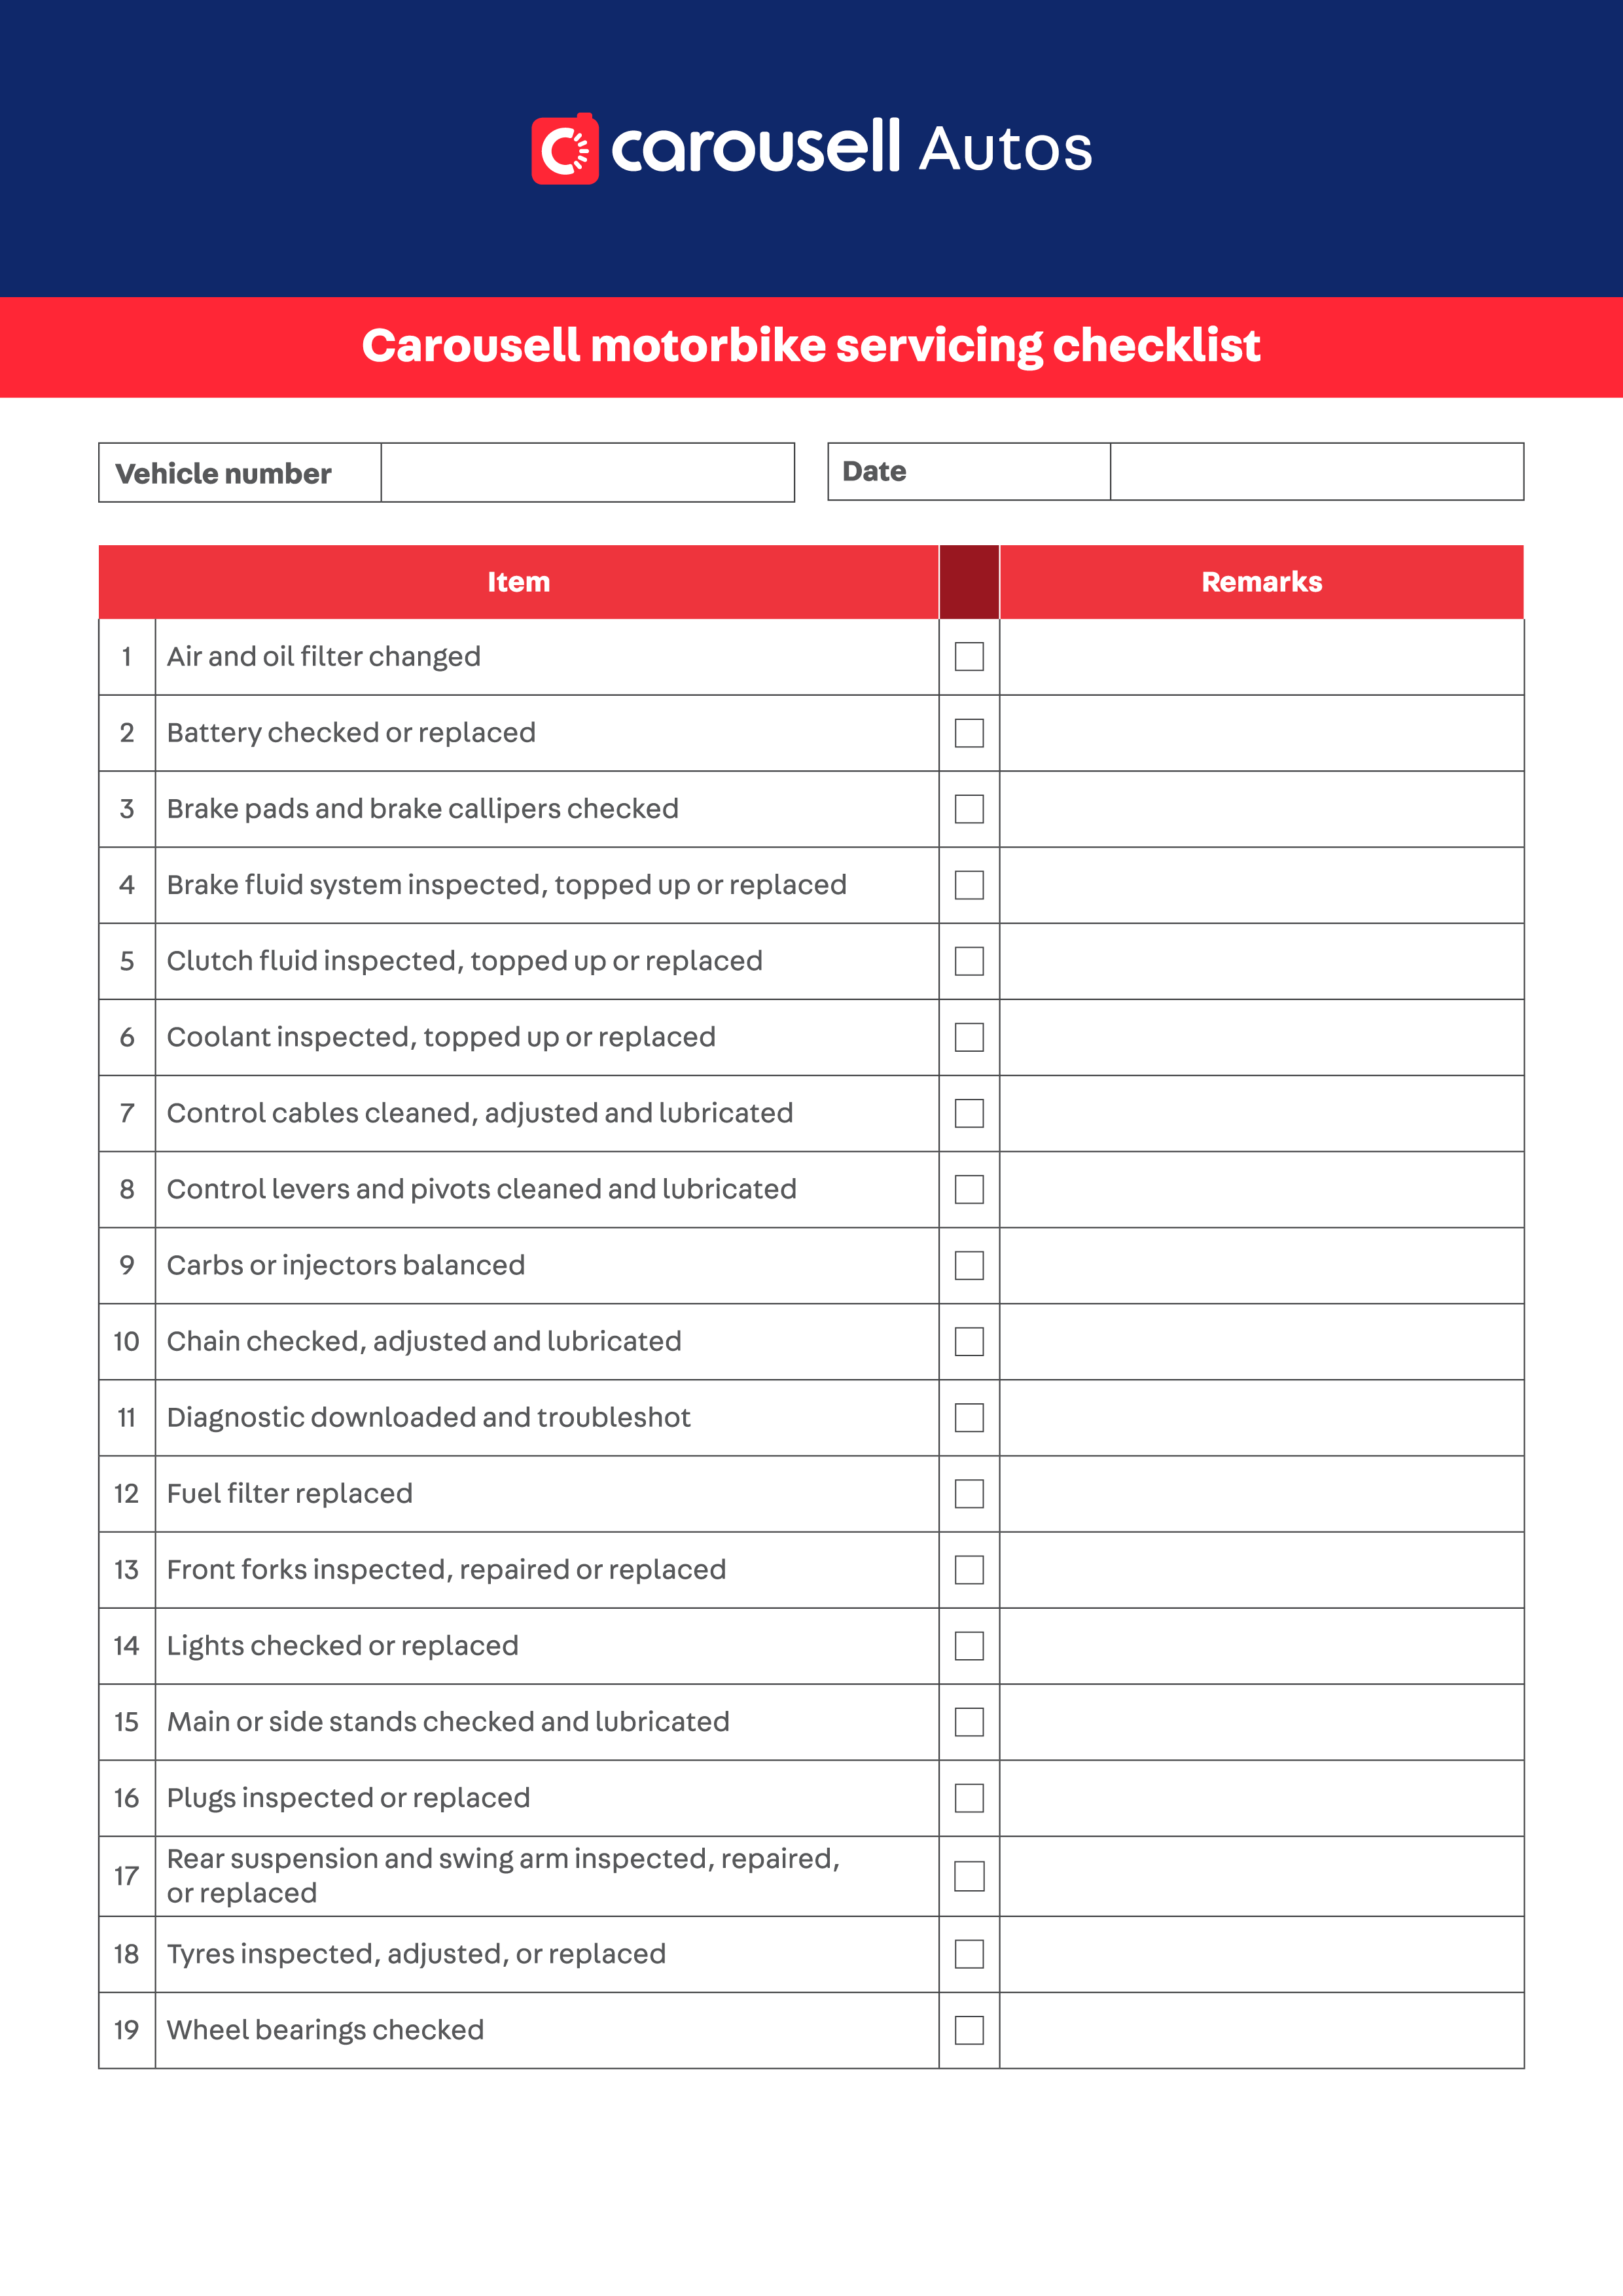 Motorbike regular servicing checklist for maintenance - Carousell